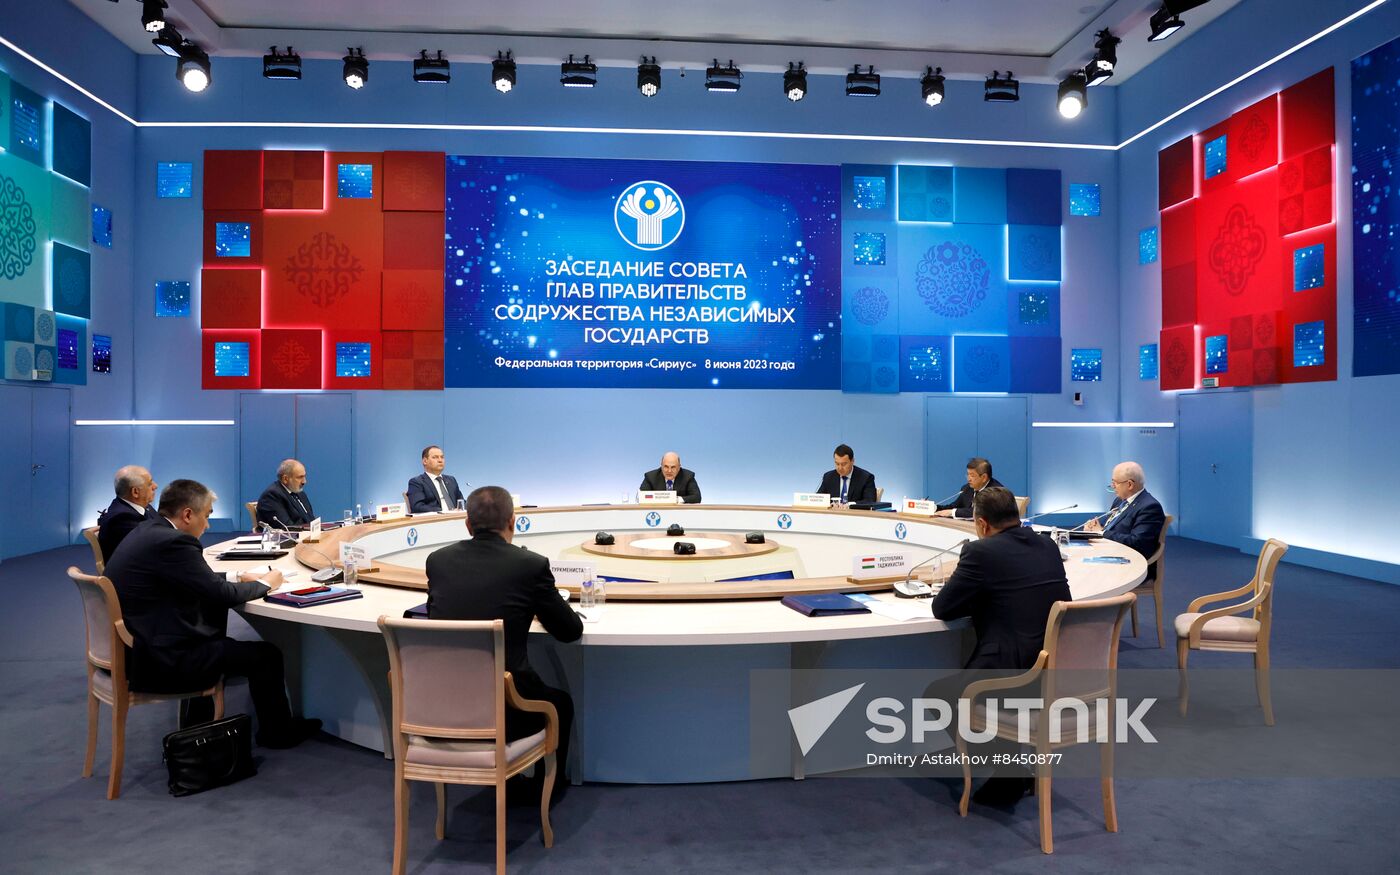 Russia Mishustin EAEU Summit